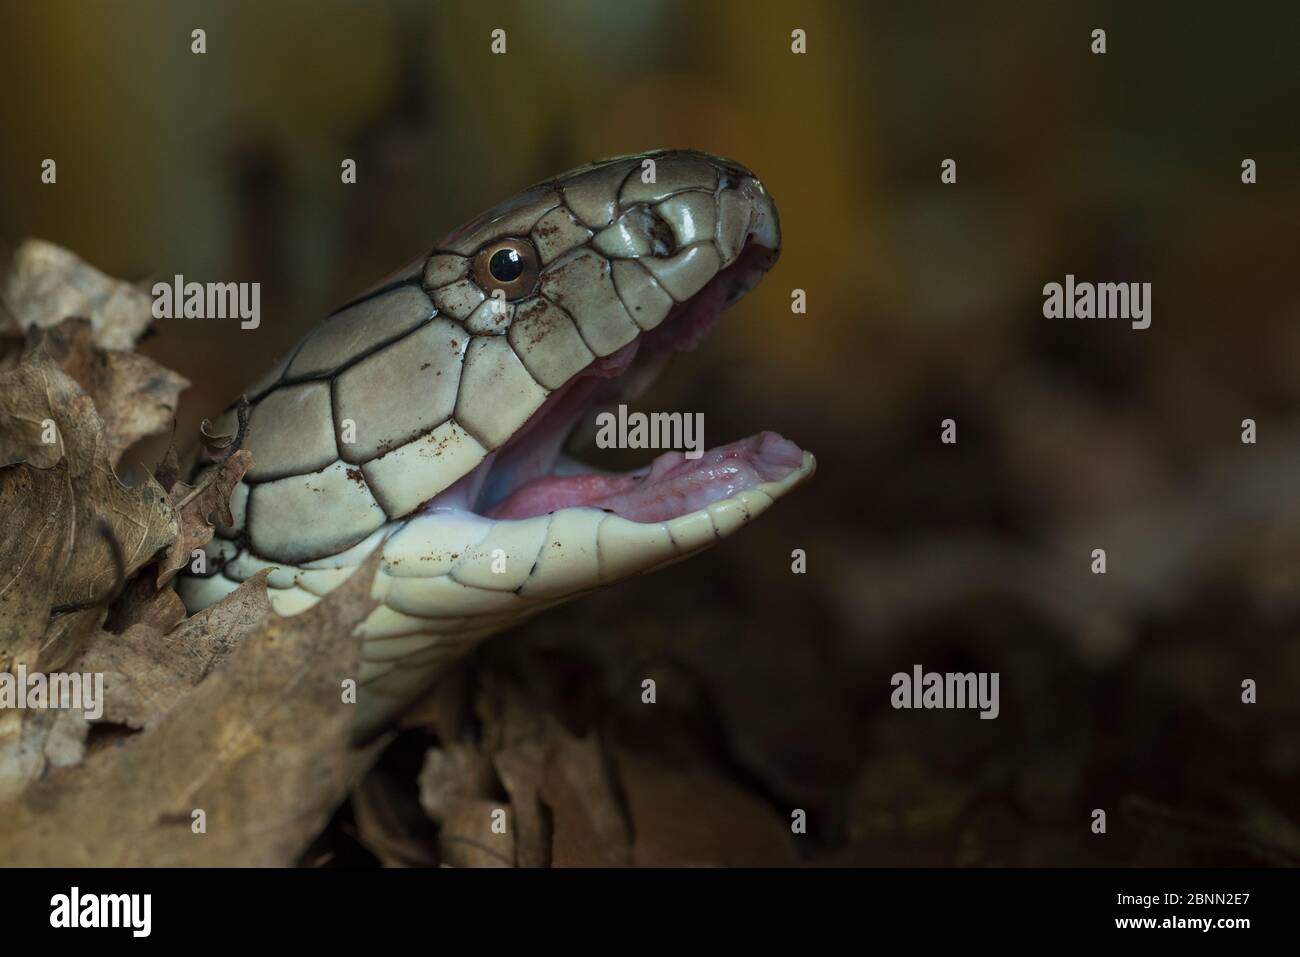 King cobra (Ophiophagus hannah) captive occurs in Asia. Stock Photo